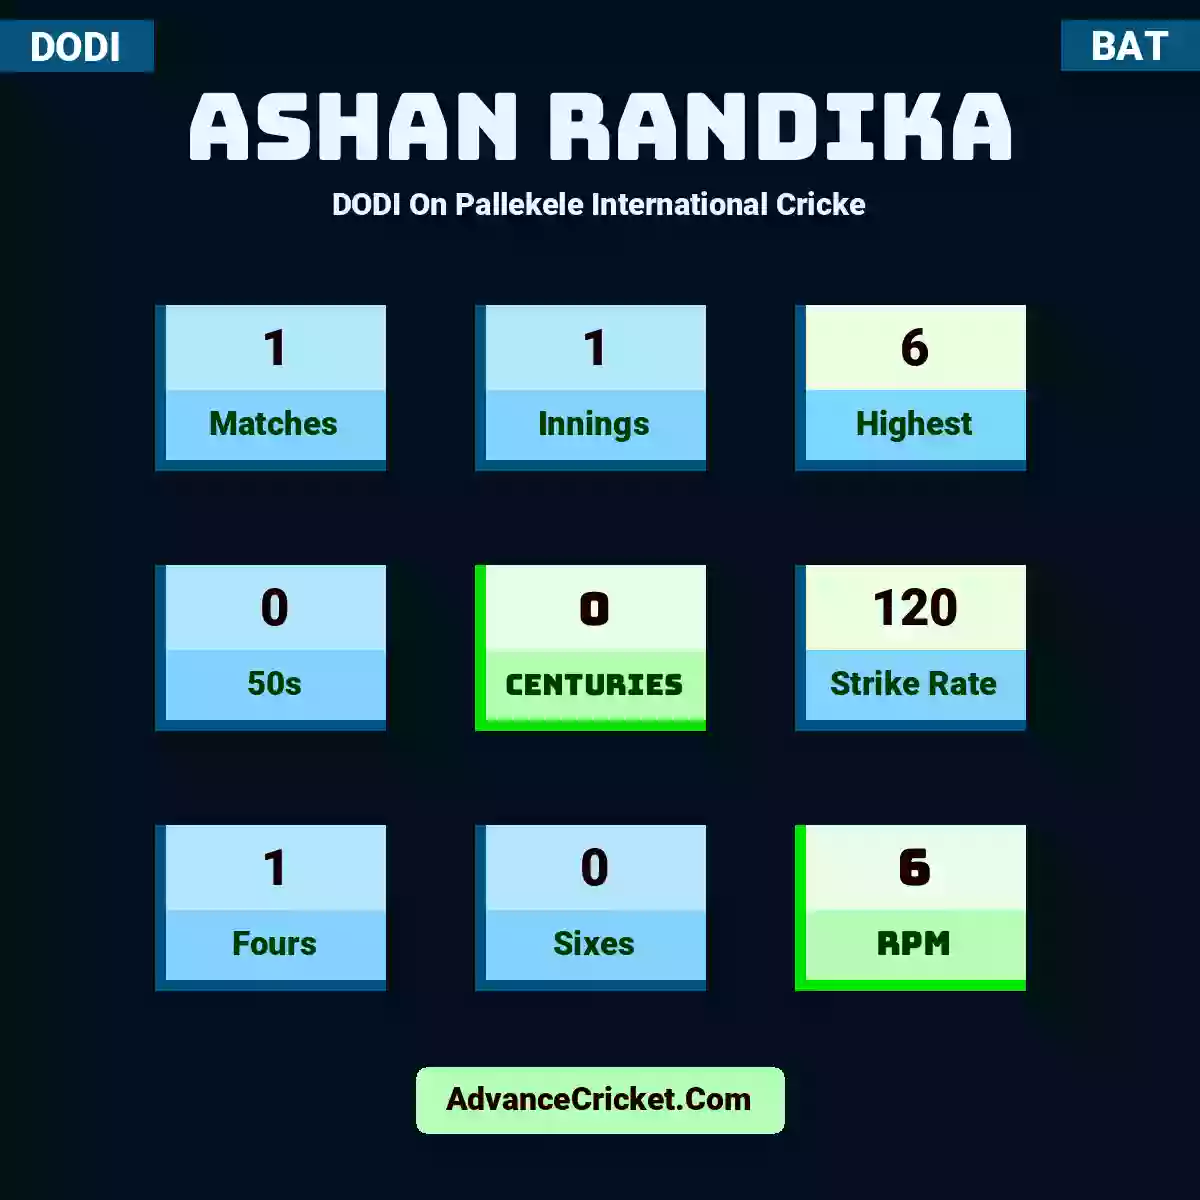 Ashan Randika DODI  On Pallekele International Cricke, Ashan Randika played 1 matches, scored 6 runs as highest, 0 half-centuries, and 0 centuries, with a strike rate of 120. A.Randika hit 1 fours and 0 sixes, with an RPM of 6.